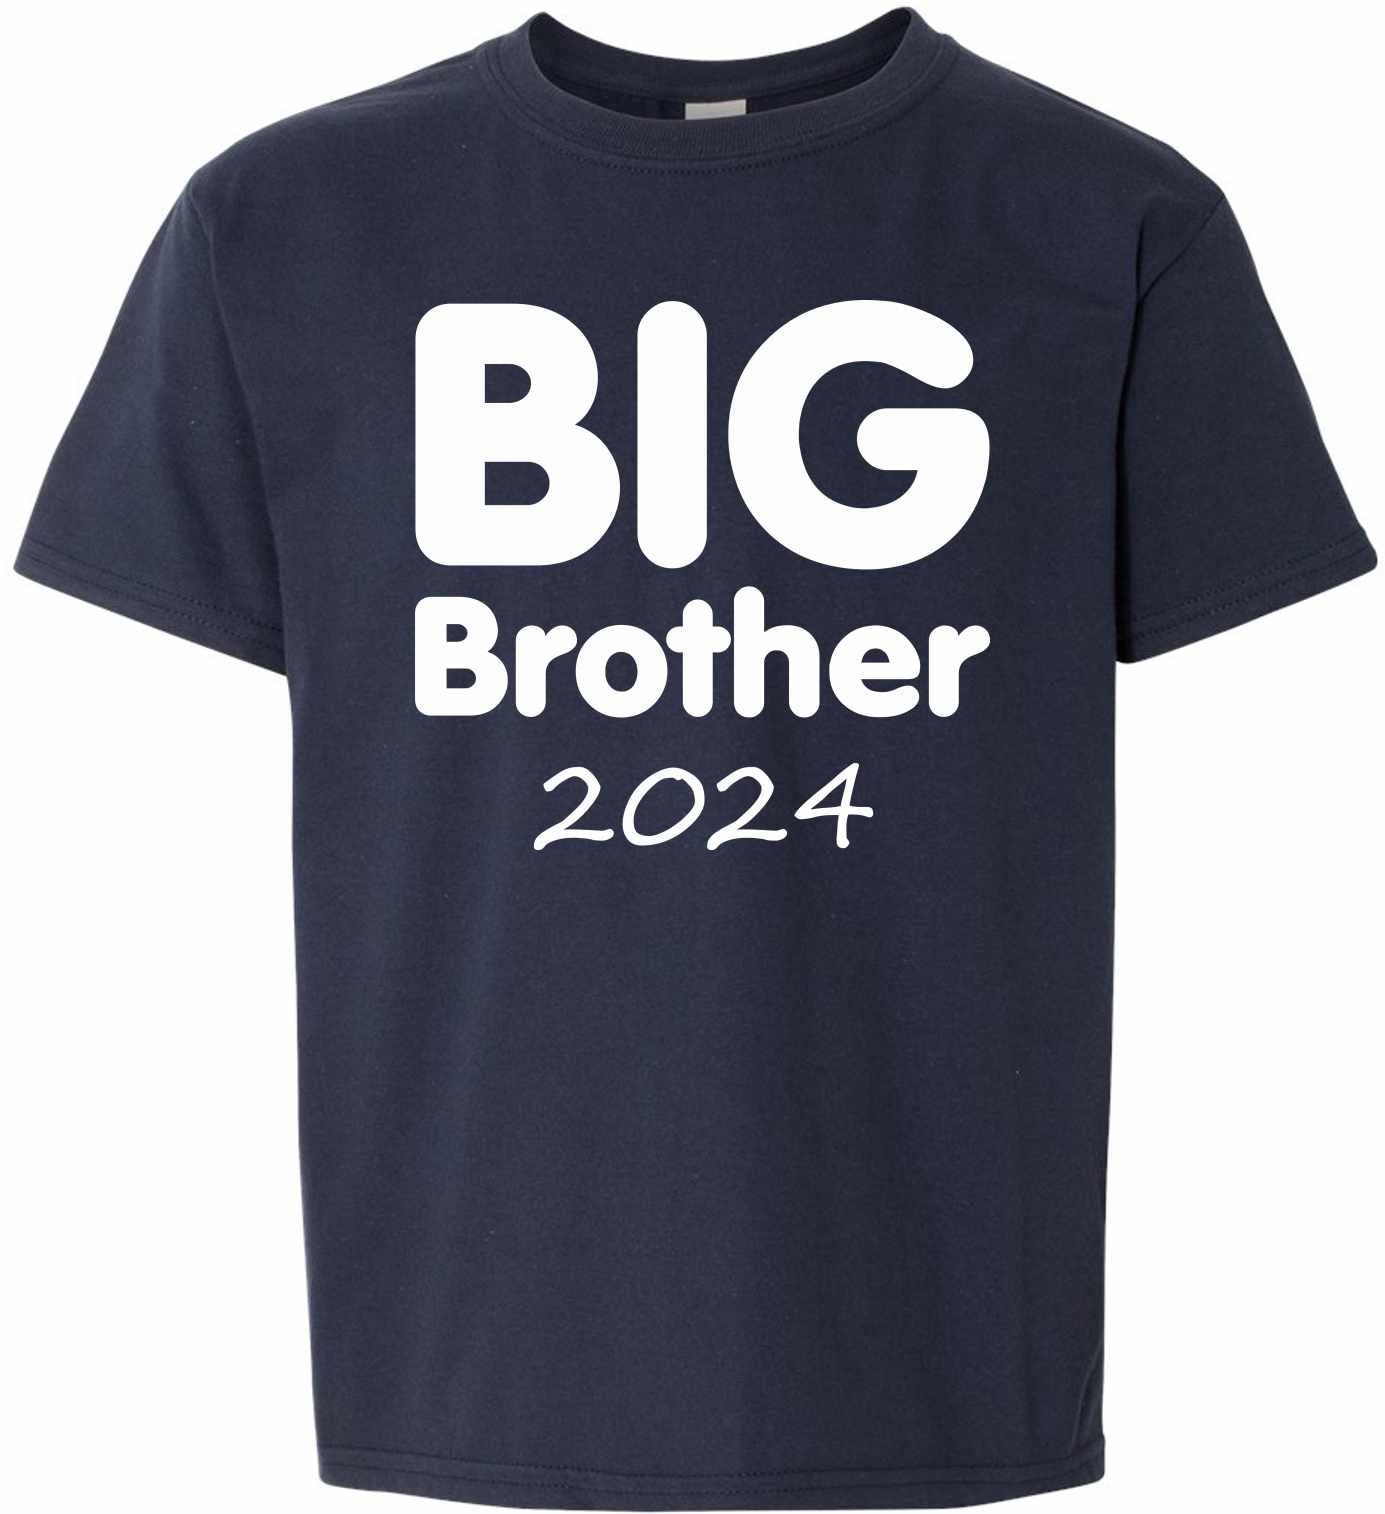 Big Brother 2024 on Kids T-Shirt (#1368-201)